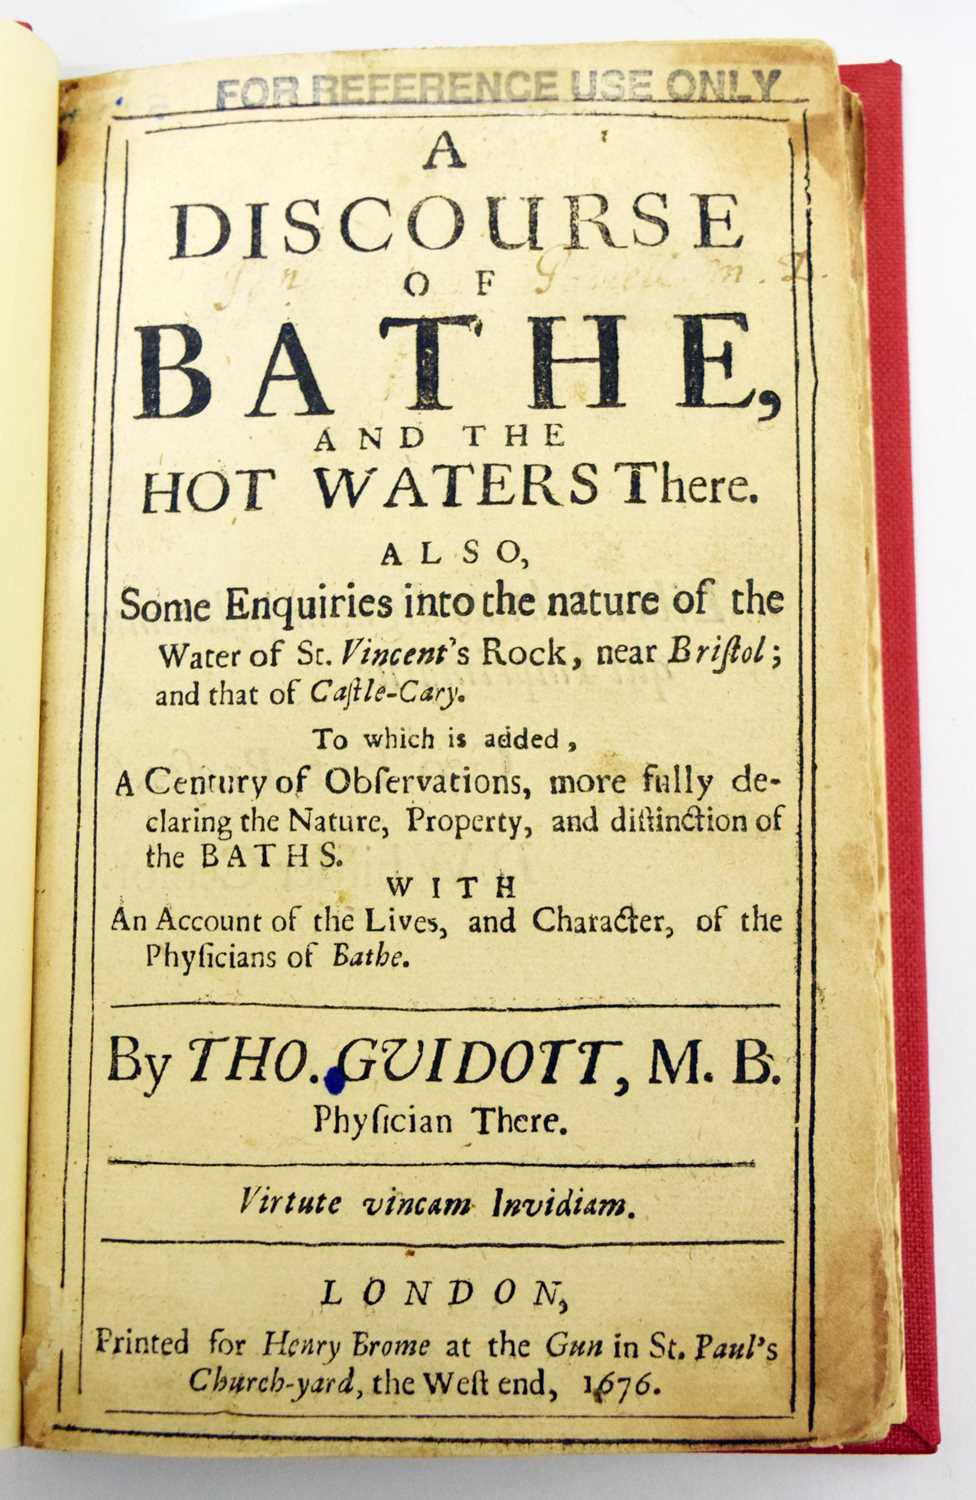 Guidott, Thomas M. B. - 'Discourse of Bathe' - First edition 1676